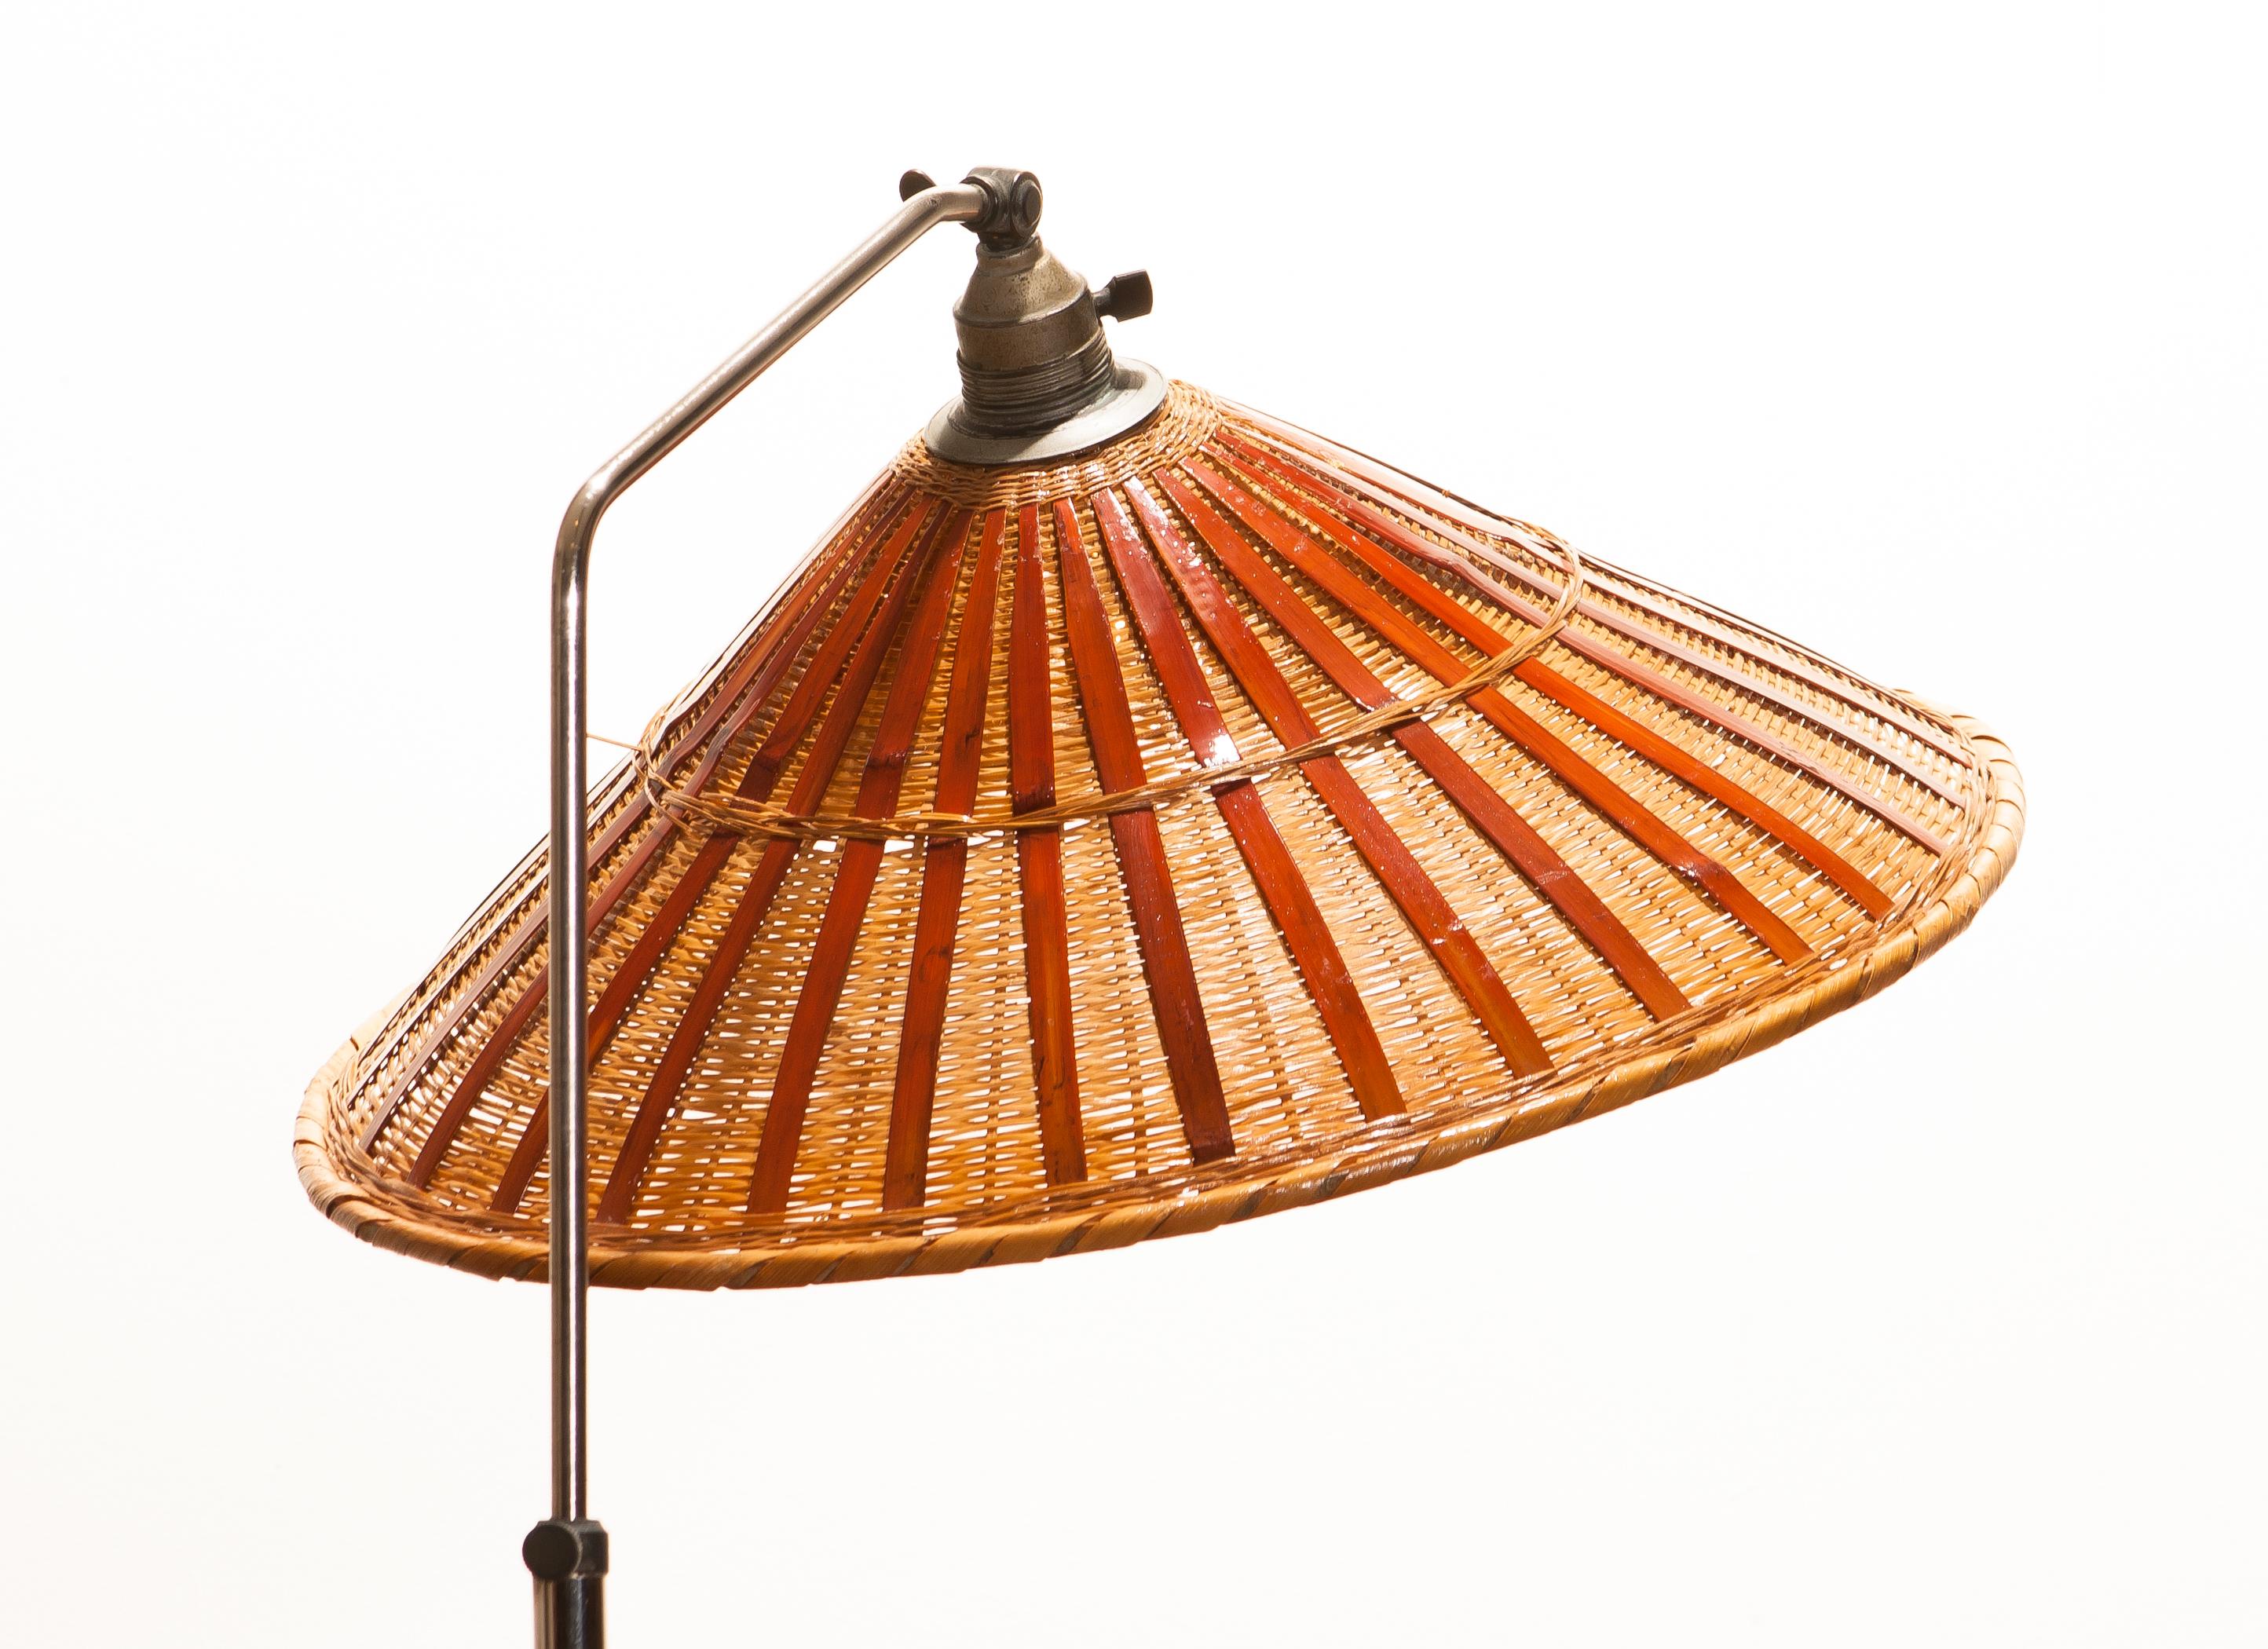 1940s, Art Deco Jugendstil Chromed Floor Lamp with Wicker Shade, Limited Edition 2